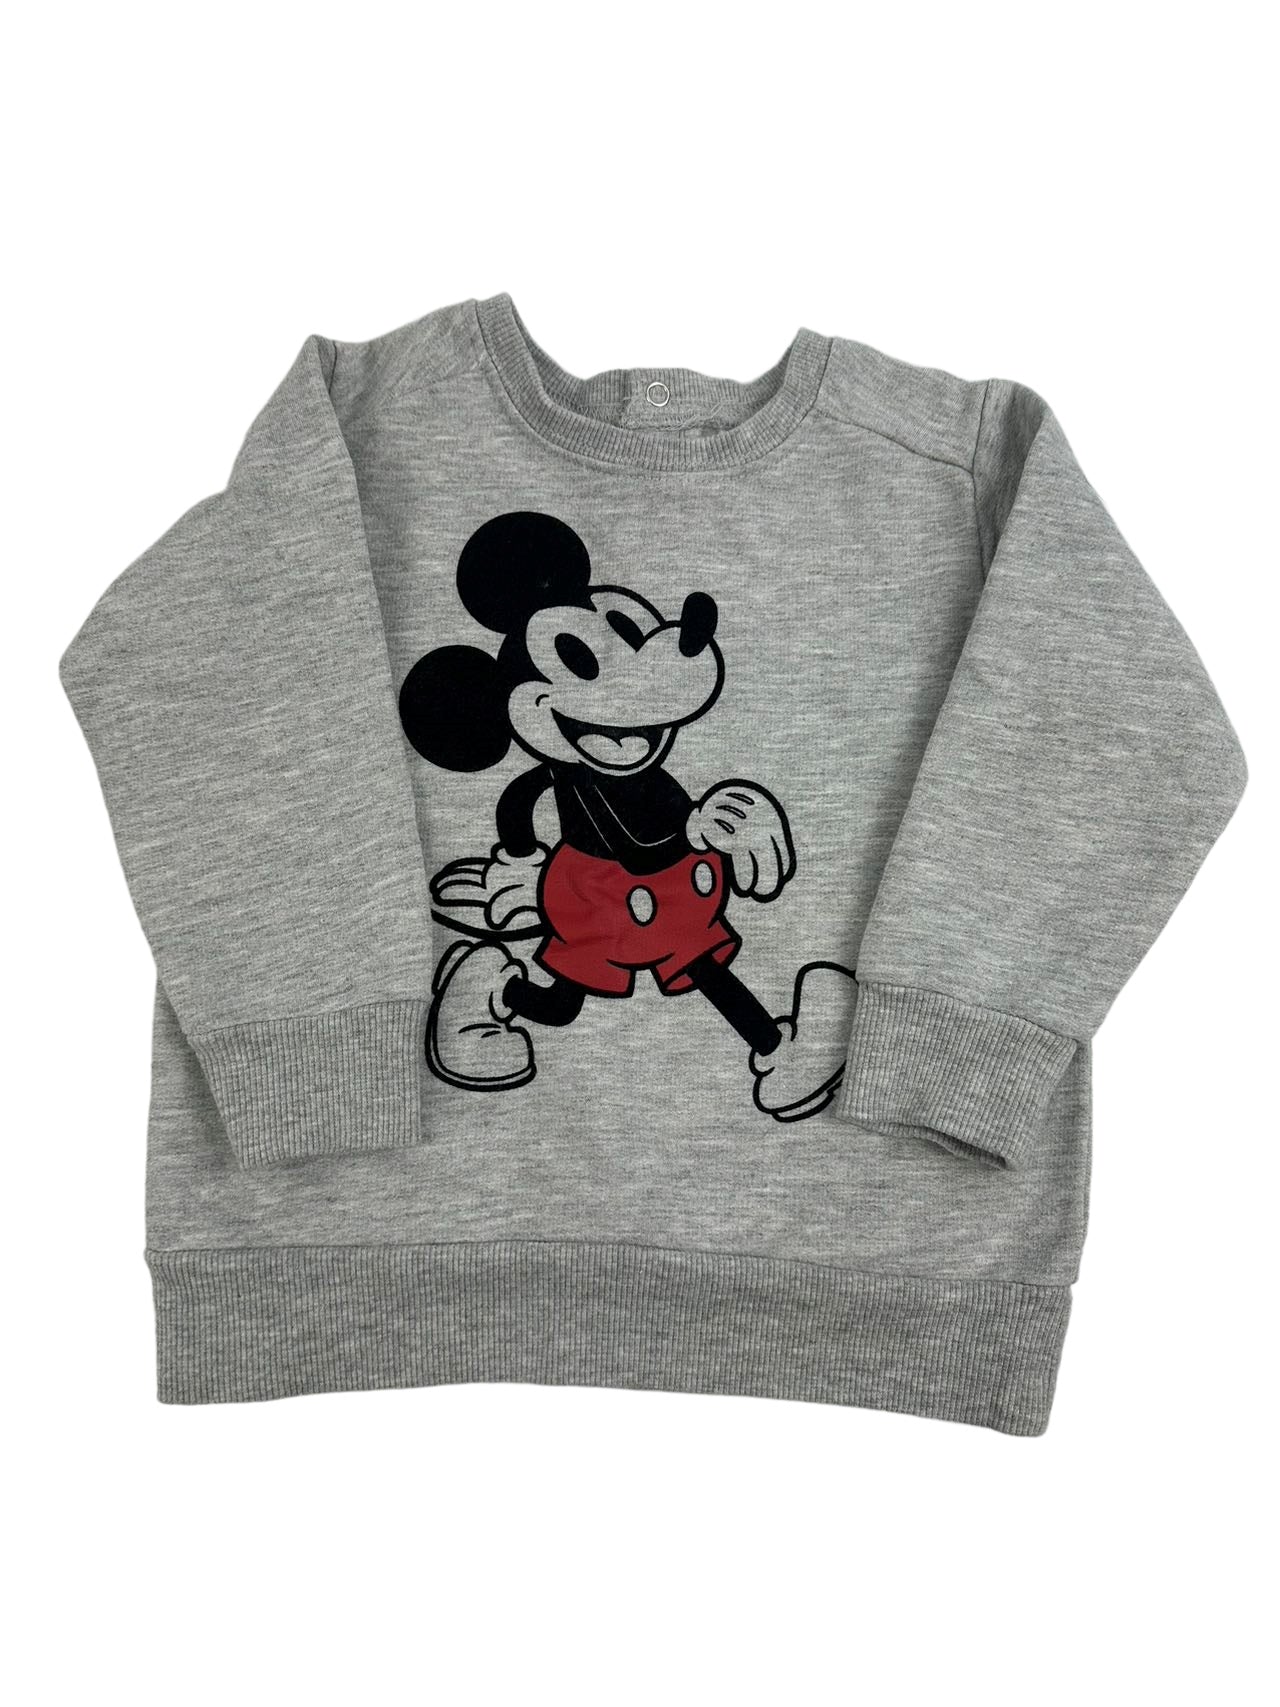 Disney Mickey Mouse T shirt (18M)